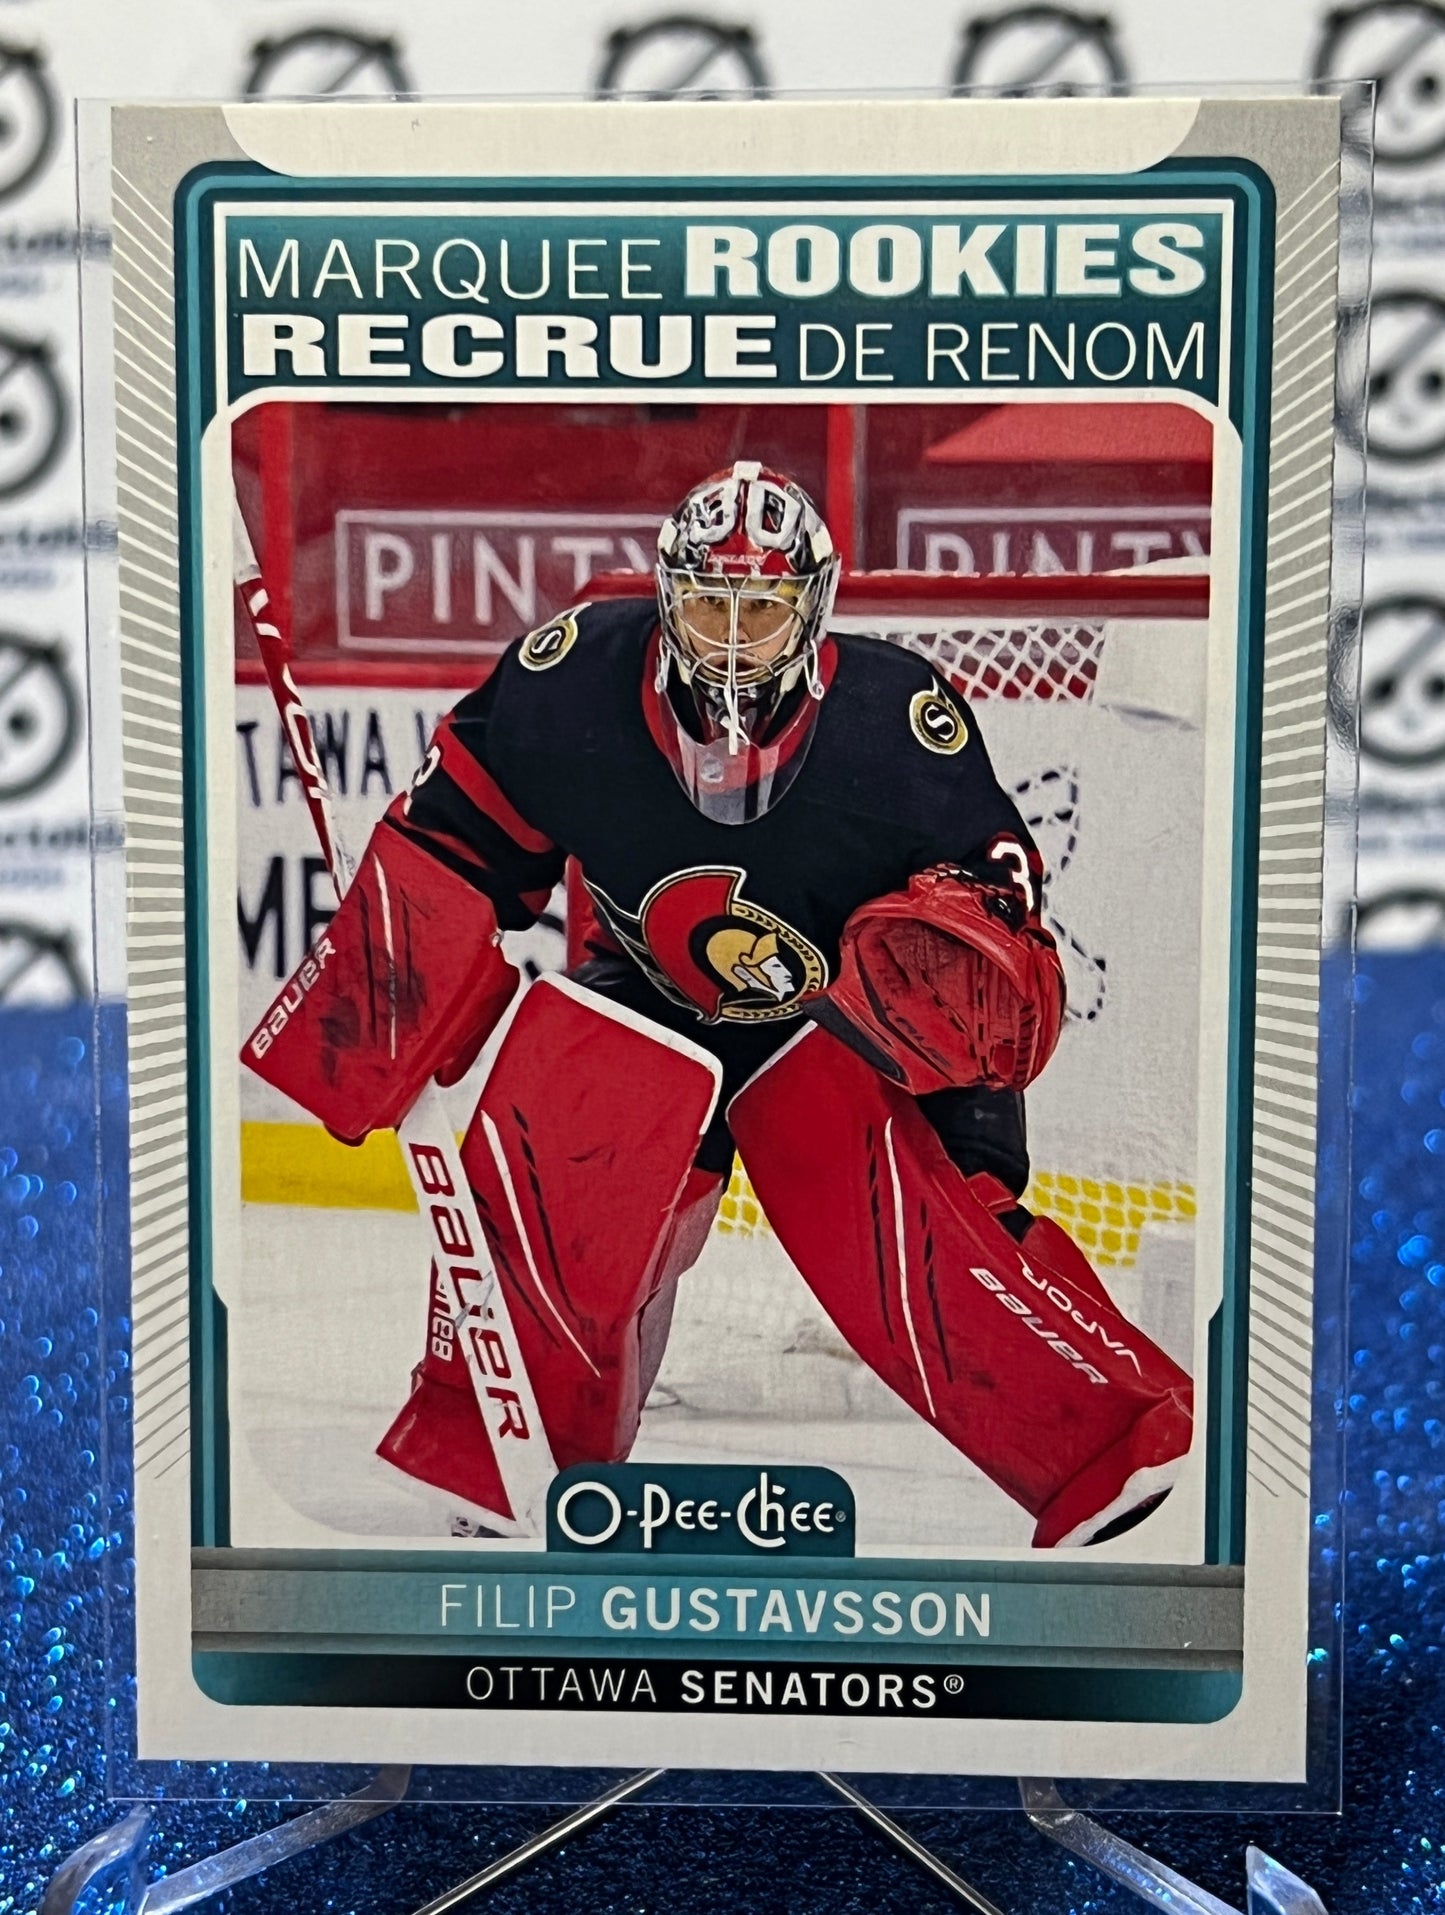 2021-22 O-PEE-CHEE FILIP GUSTAVSSON # 527 MARQUEE ROOKIE OTTAWA SENATORS NHL HOCKEY CARD